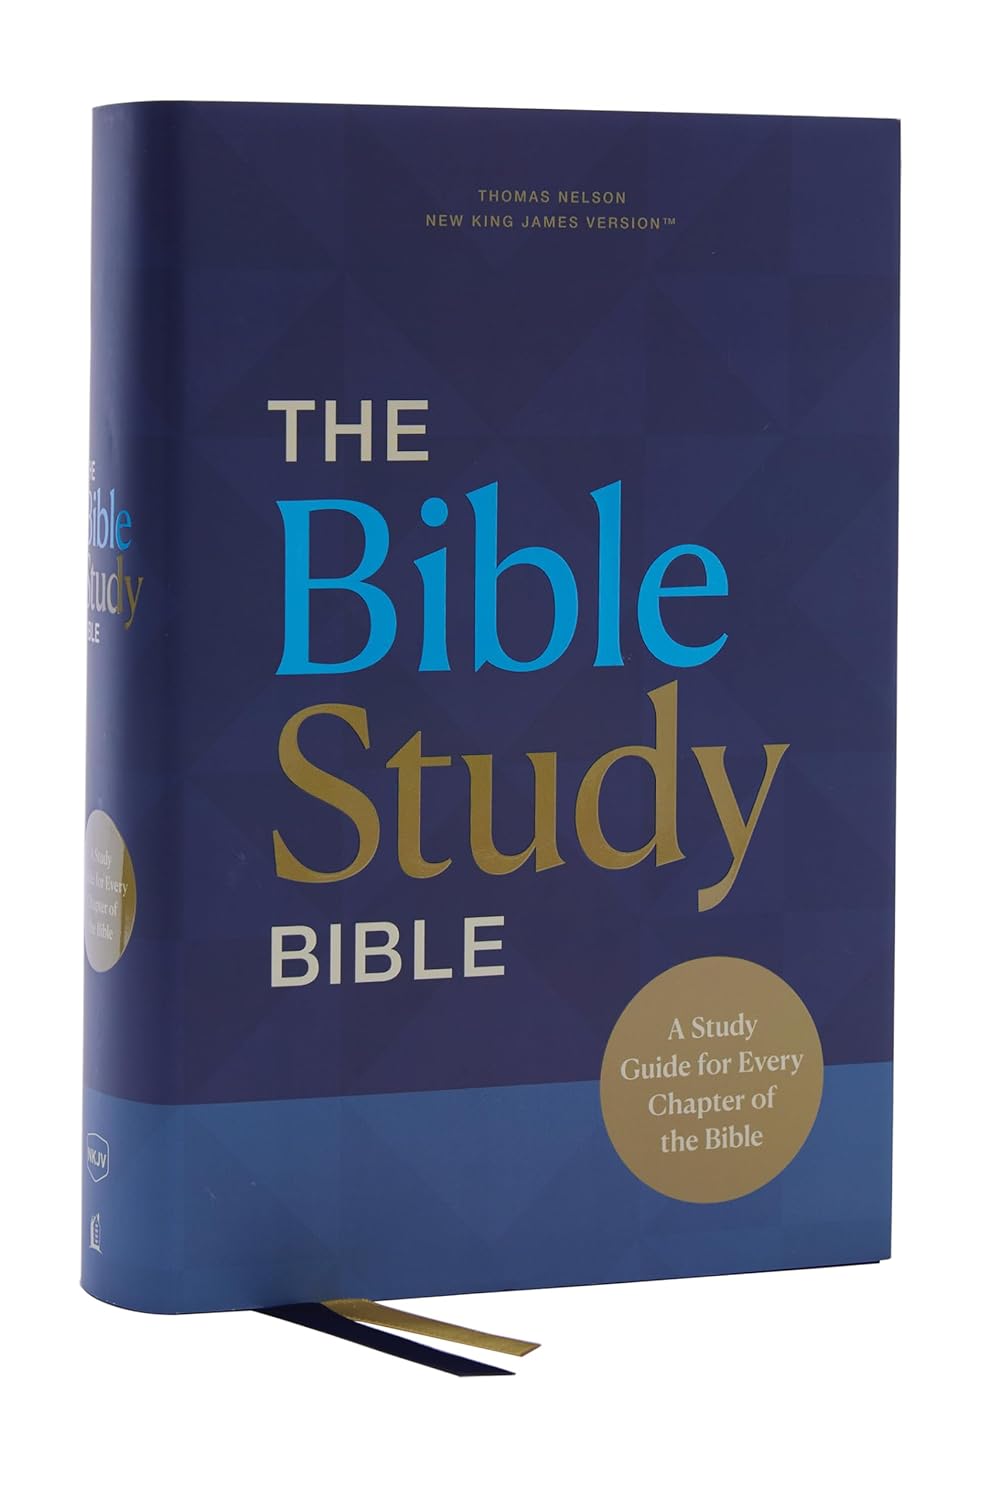 NKJV The Bible Study Bible, Comfort Print, Hardcover